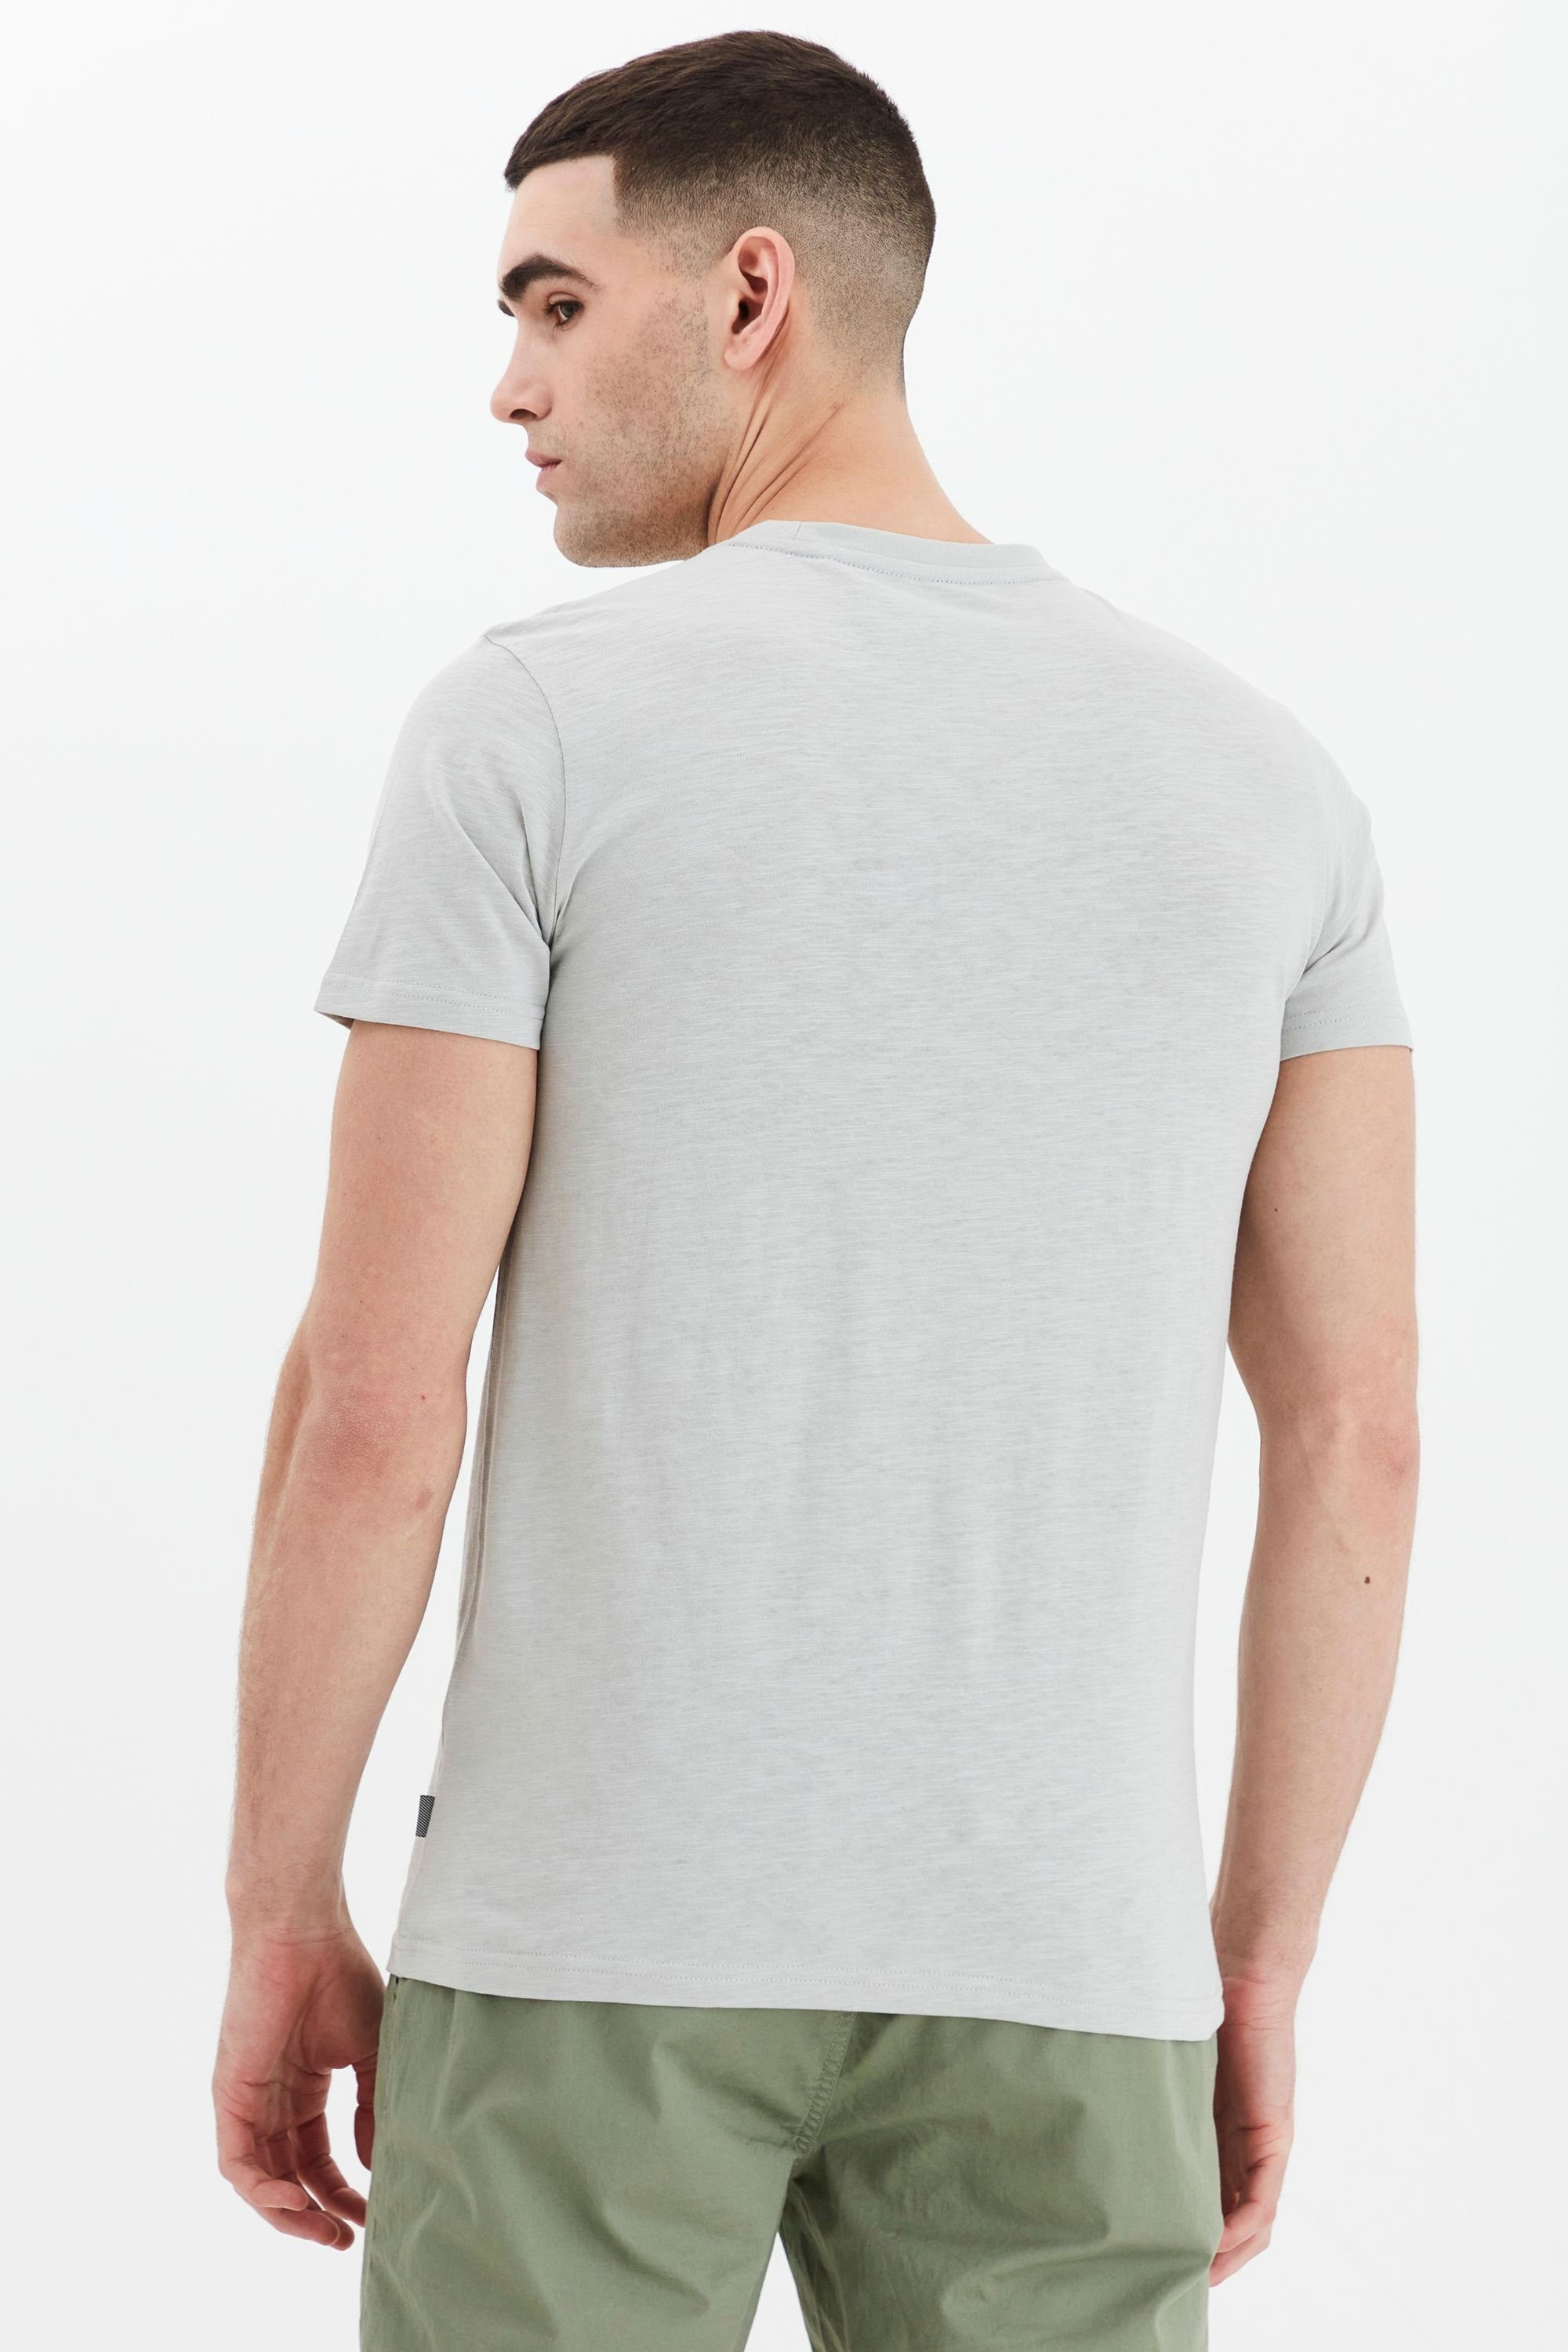 Print (154101) T-Shirt Grey mit !Solid Print-Shirt Light SDEmmo